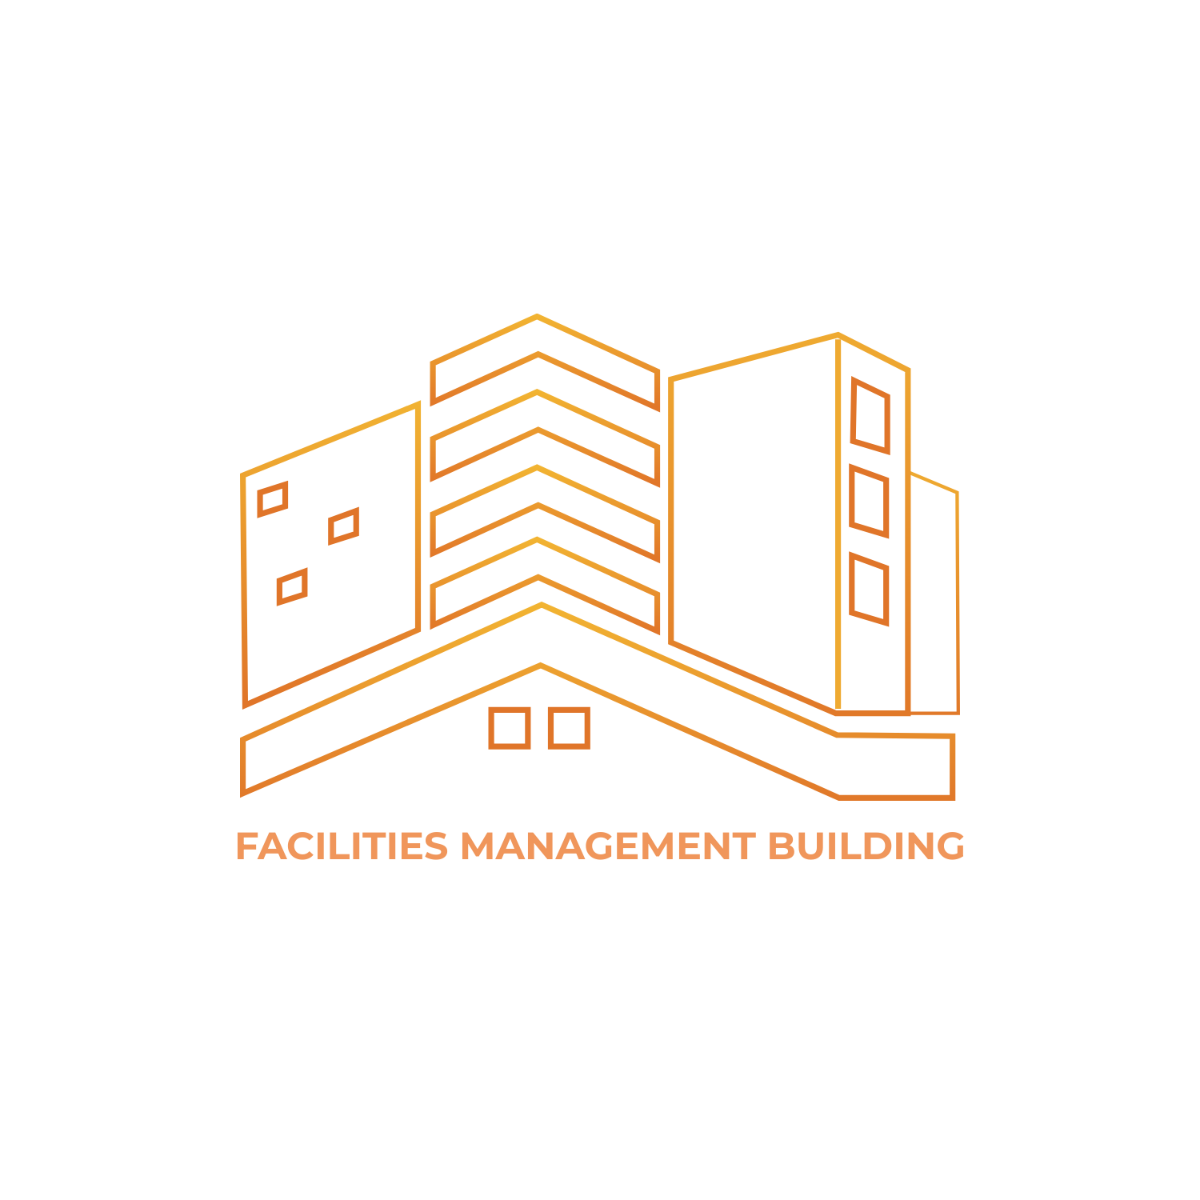 Facilities Management Building Logo Template